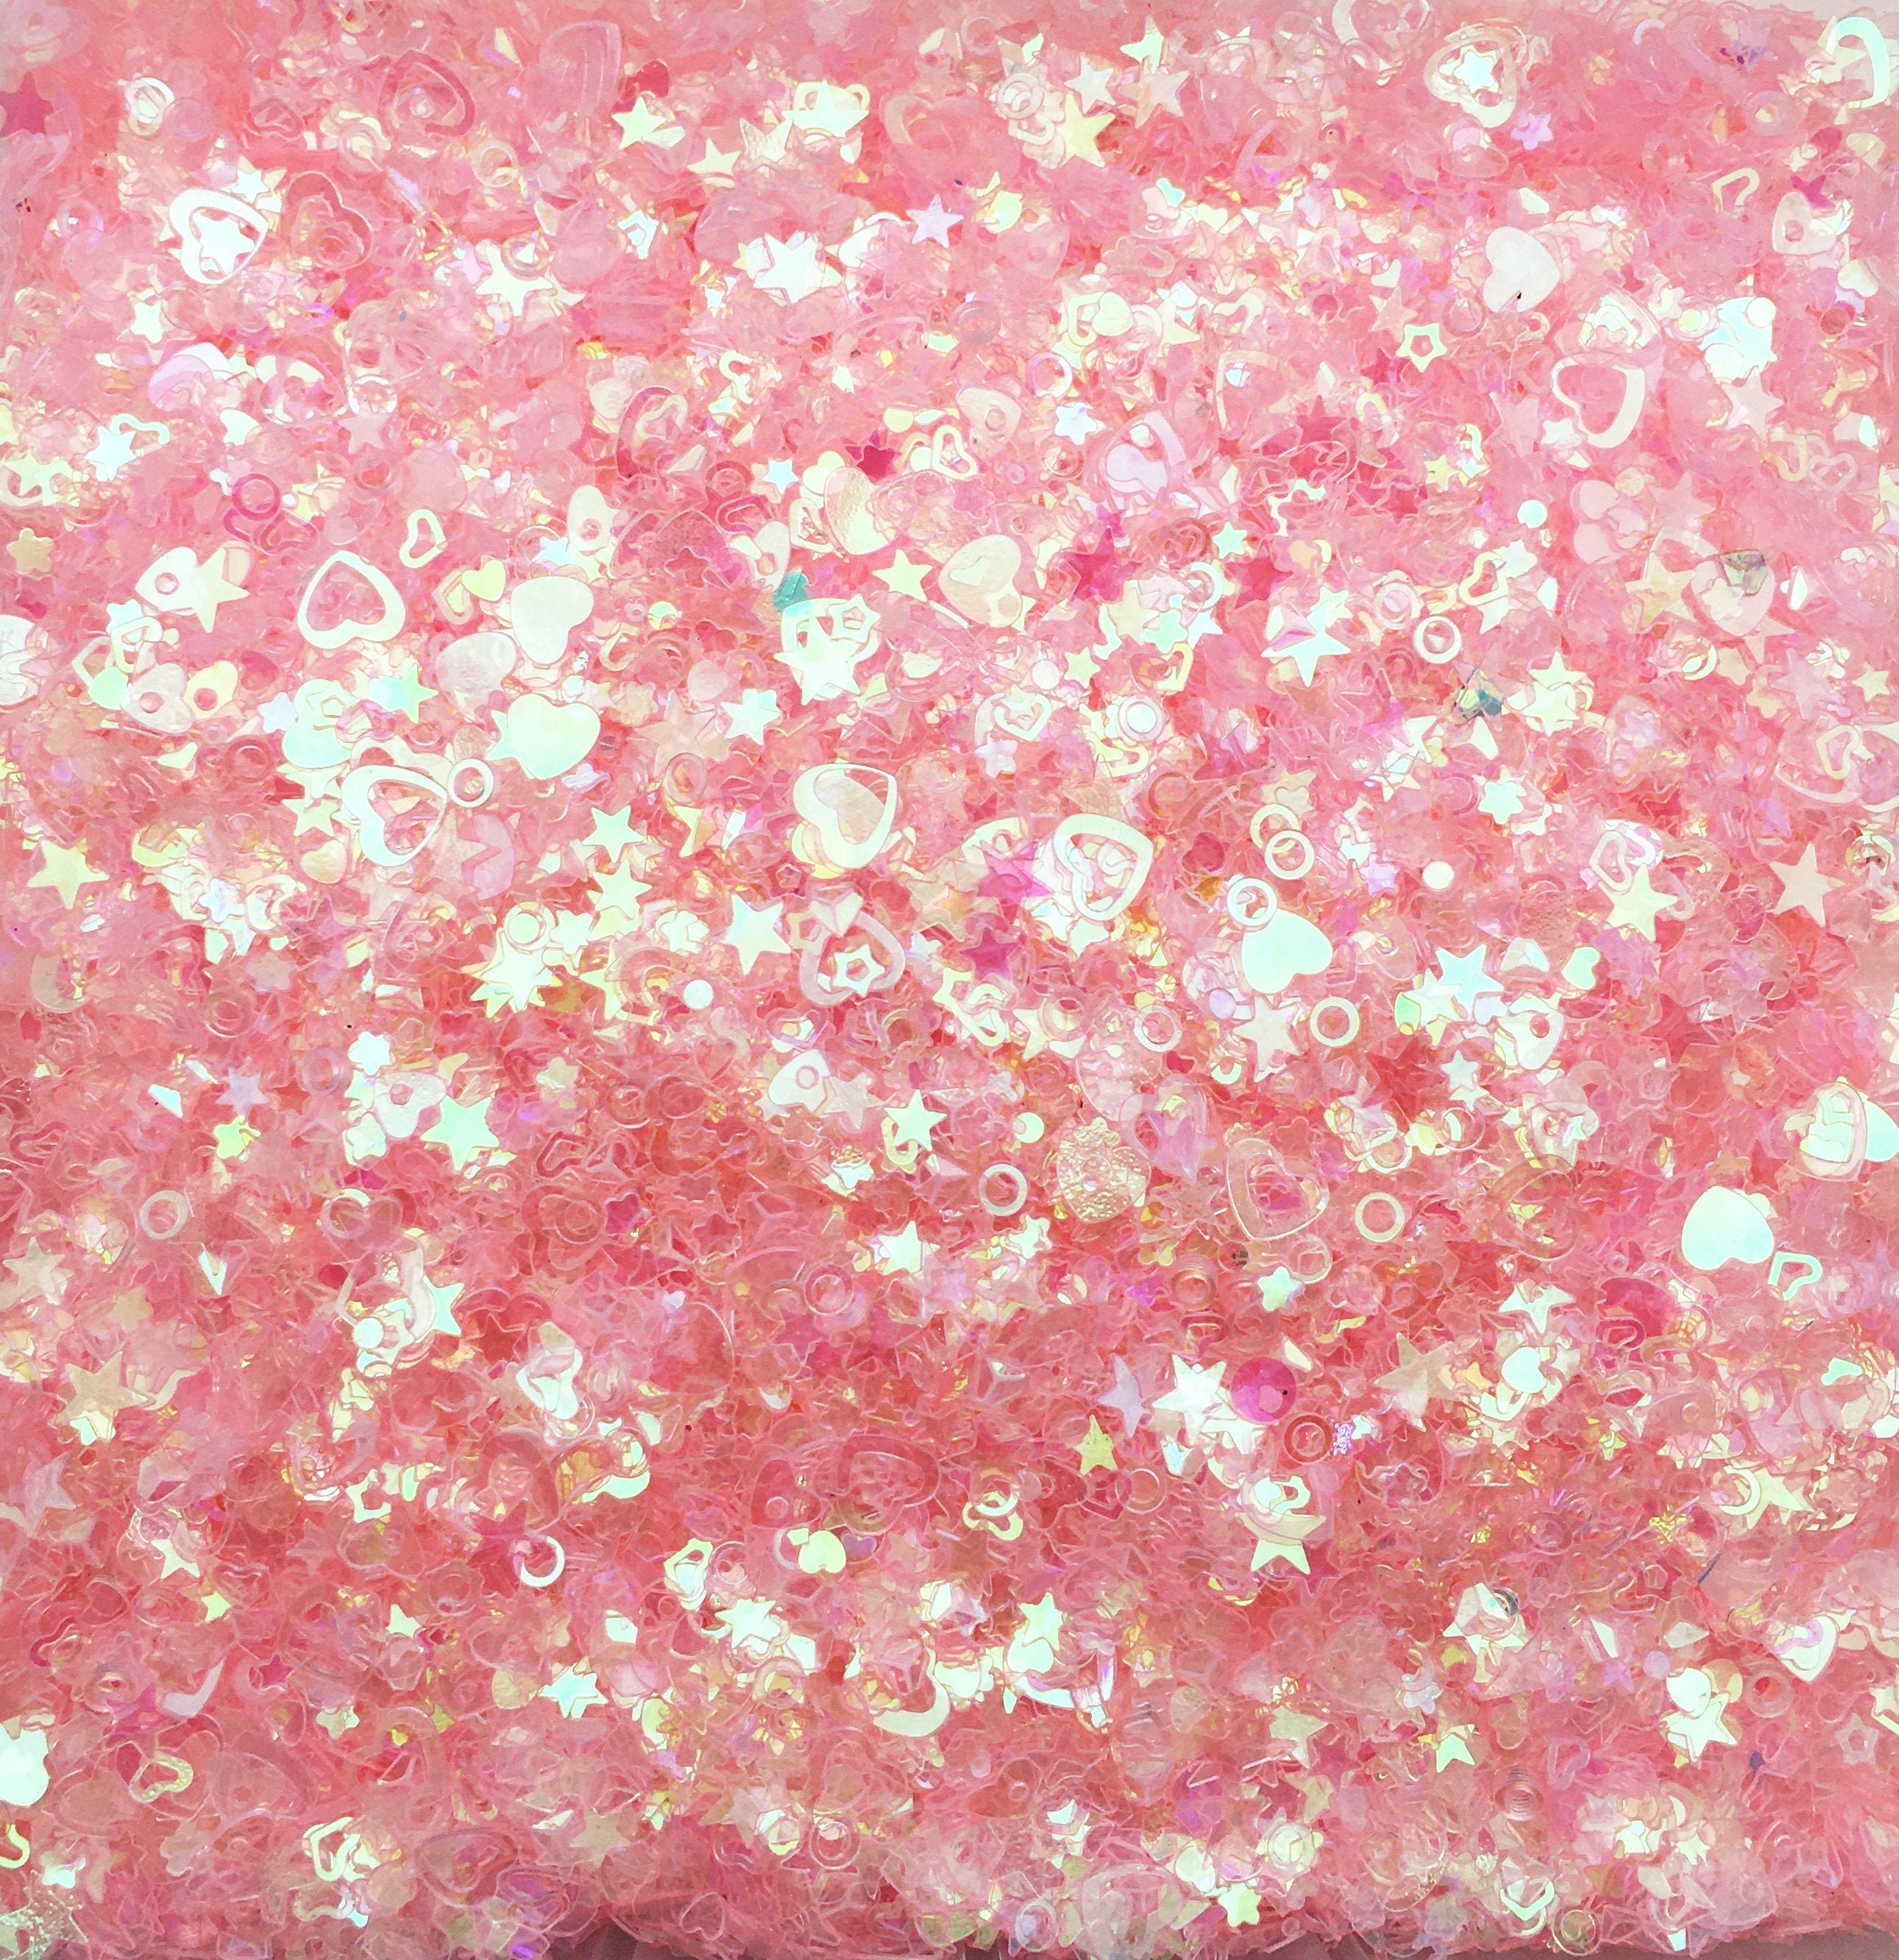 Iridescent Pink Transparent Assorted Shape Glitter, Pick Your Amount,  Shaker Mix, Kawaii Glitter U193 